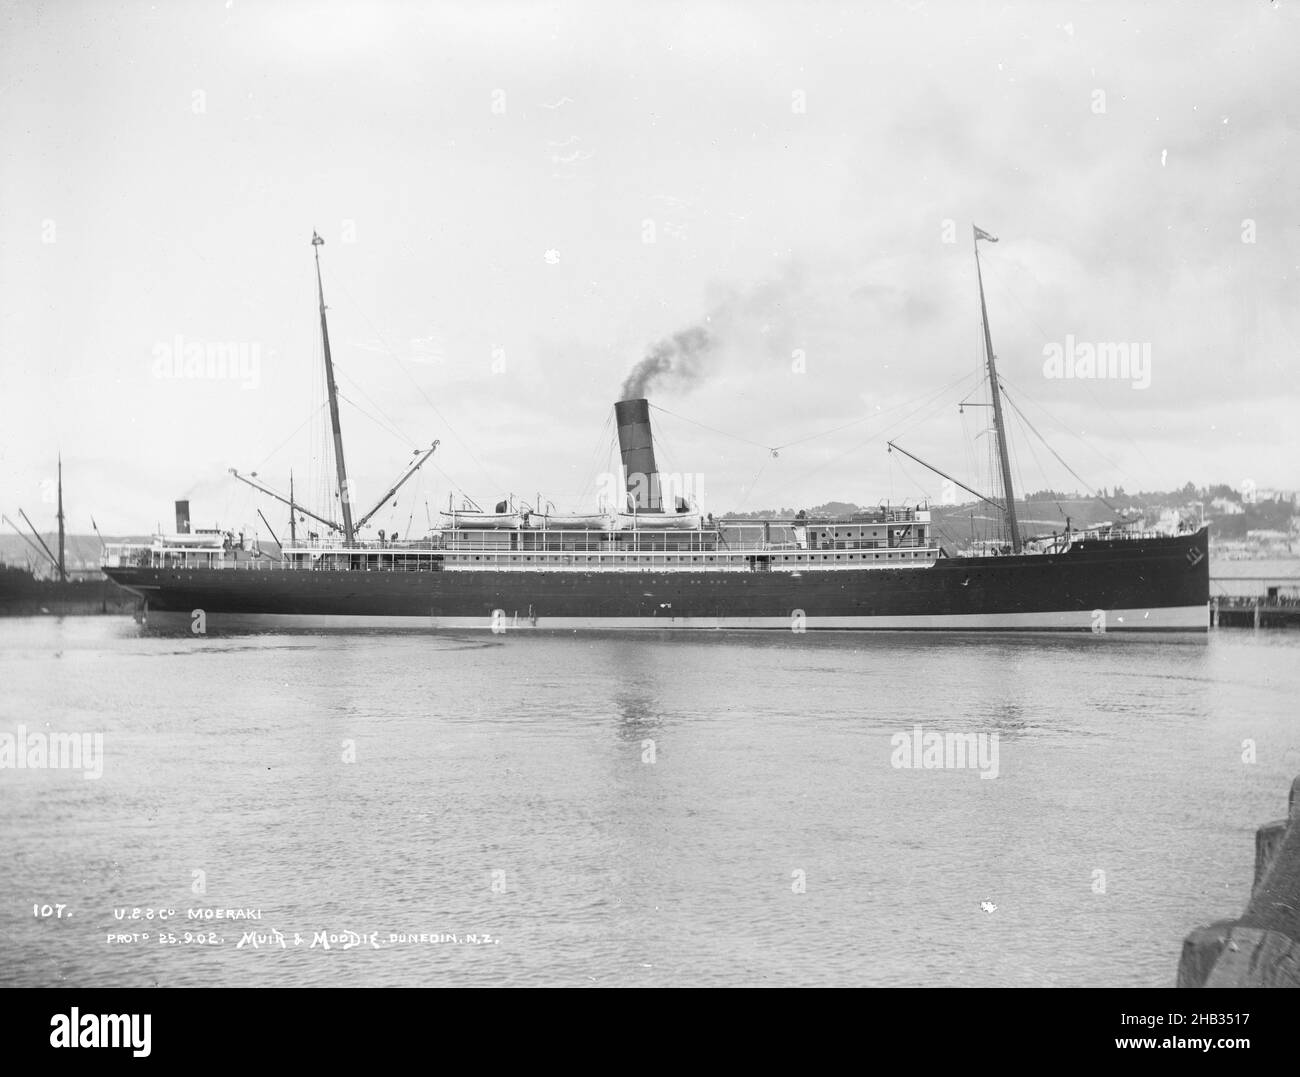 Union Steam Ship Co. Moeraki, Muir & Moodie Studio, Fotostudio, Neuseeland, Schwarz-Weiß-Fotografie, Boot ist das 'Moeraki Stockfoto